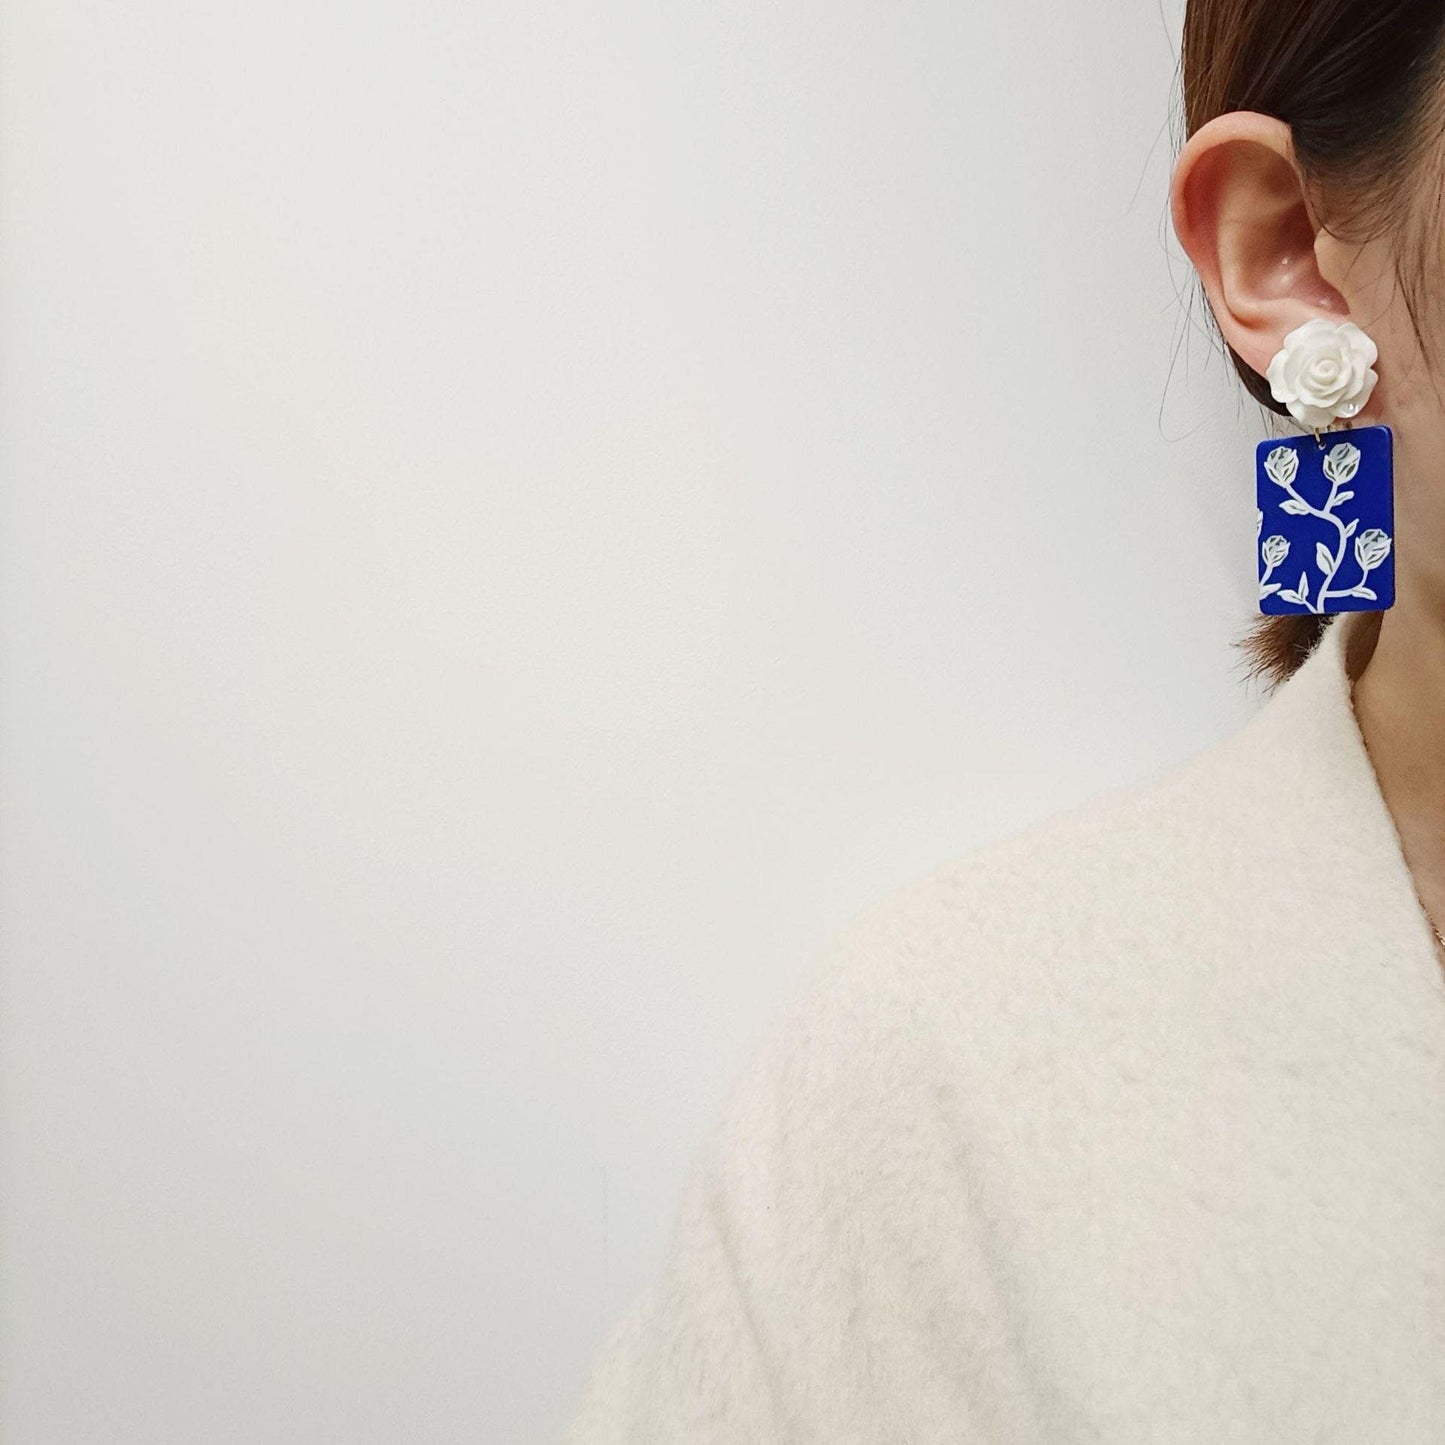 Acrylic The Blue Rose Earrings (Lightweight)